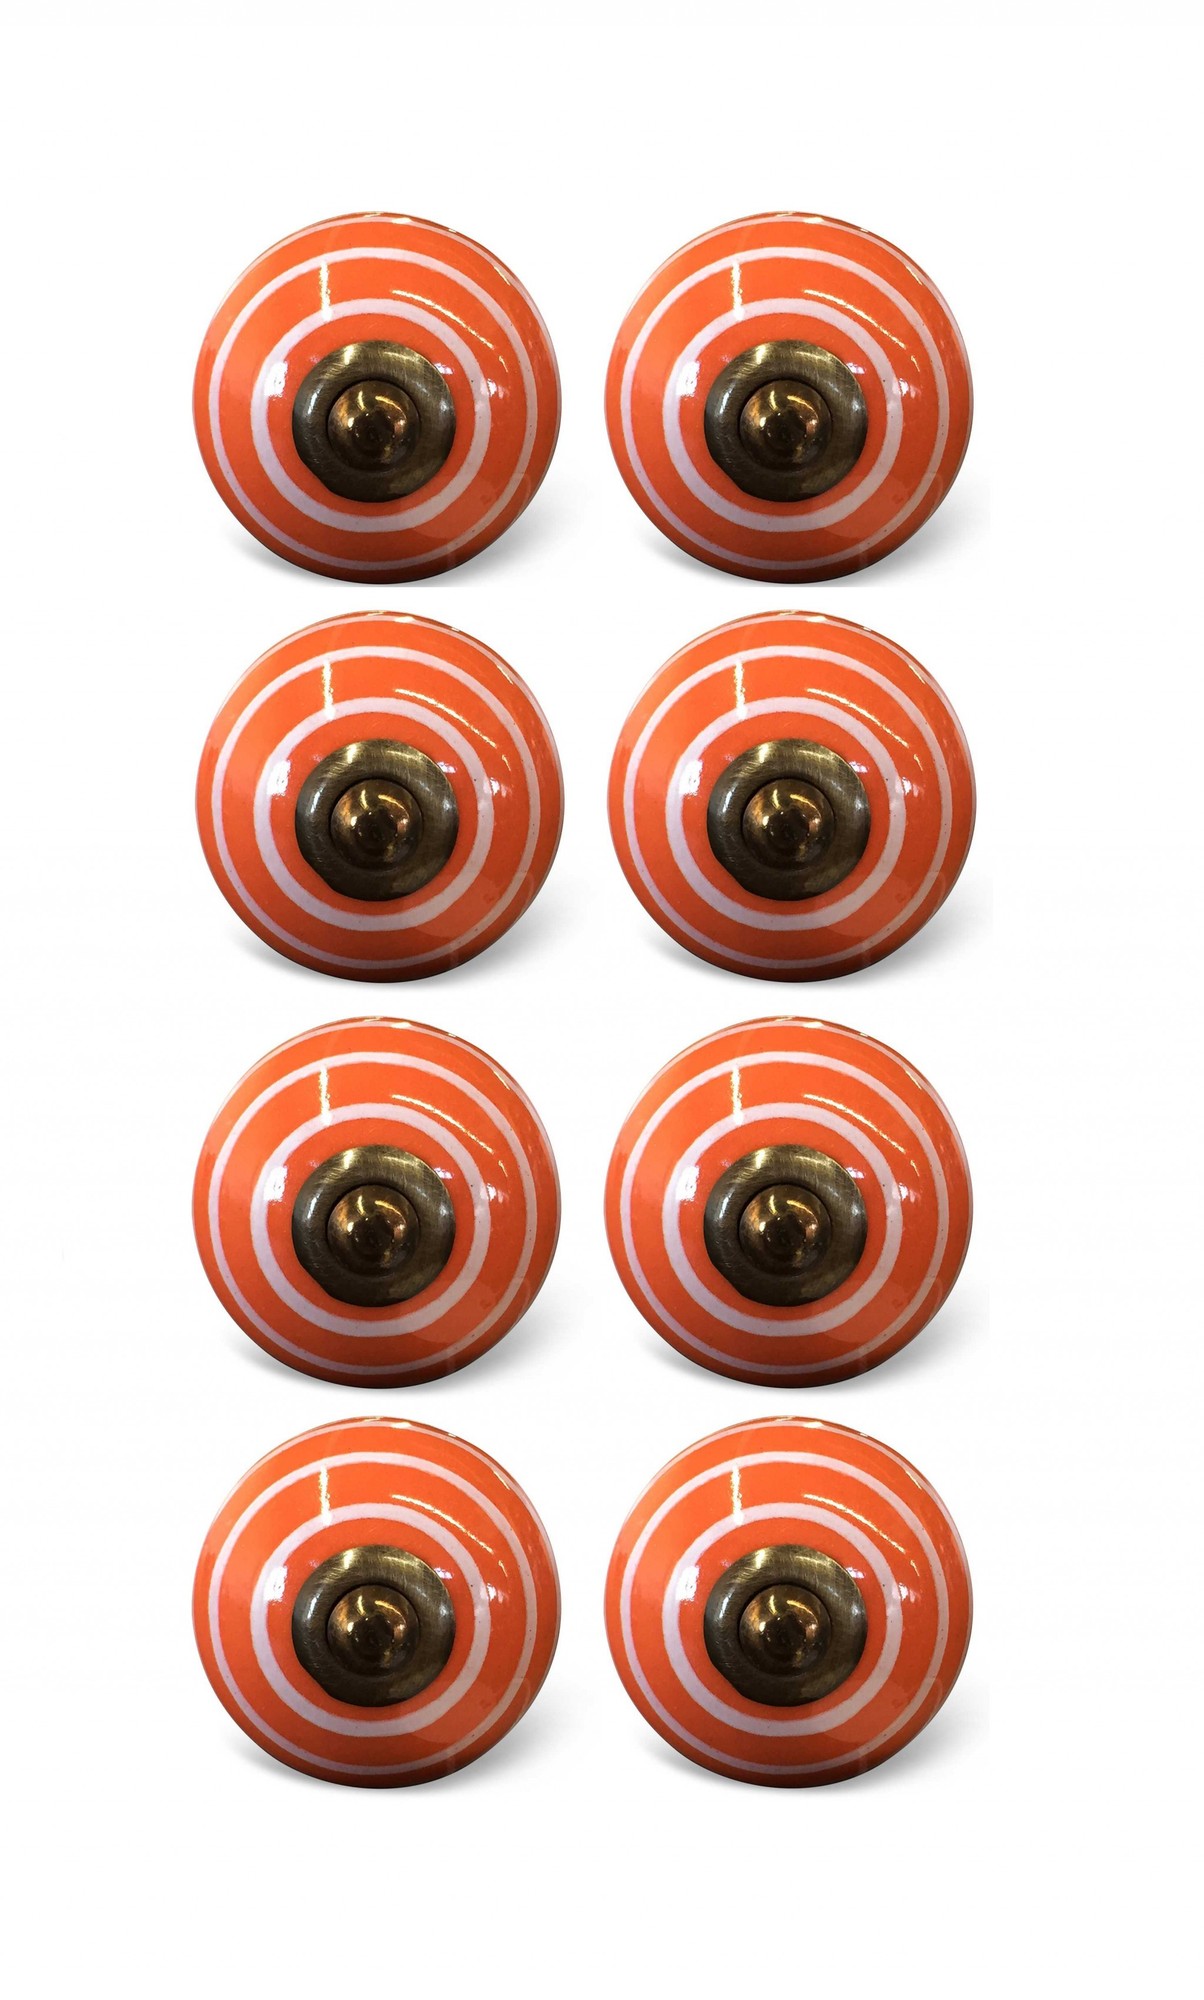 1.5" x 1.5" x 1.5" Bronze, White And Orange - Knobs 8-Pack